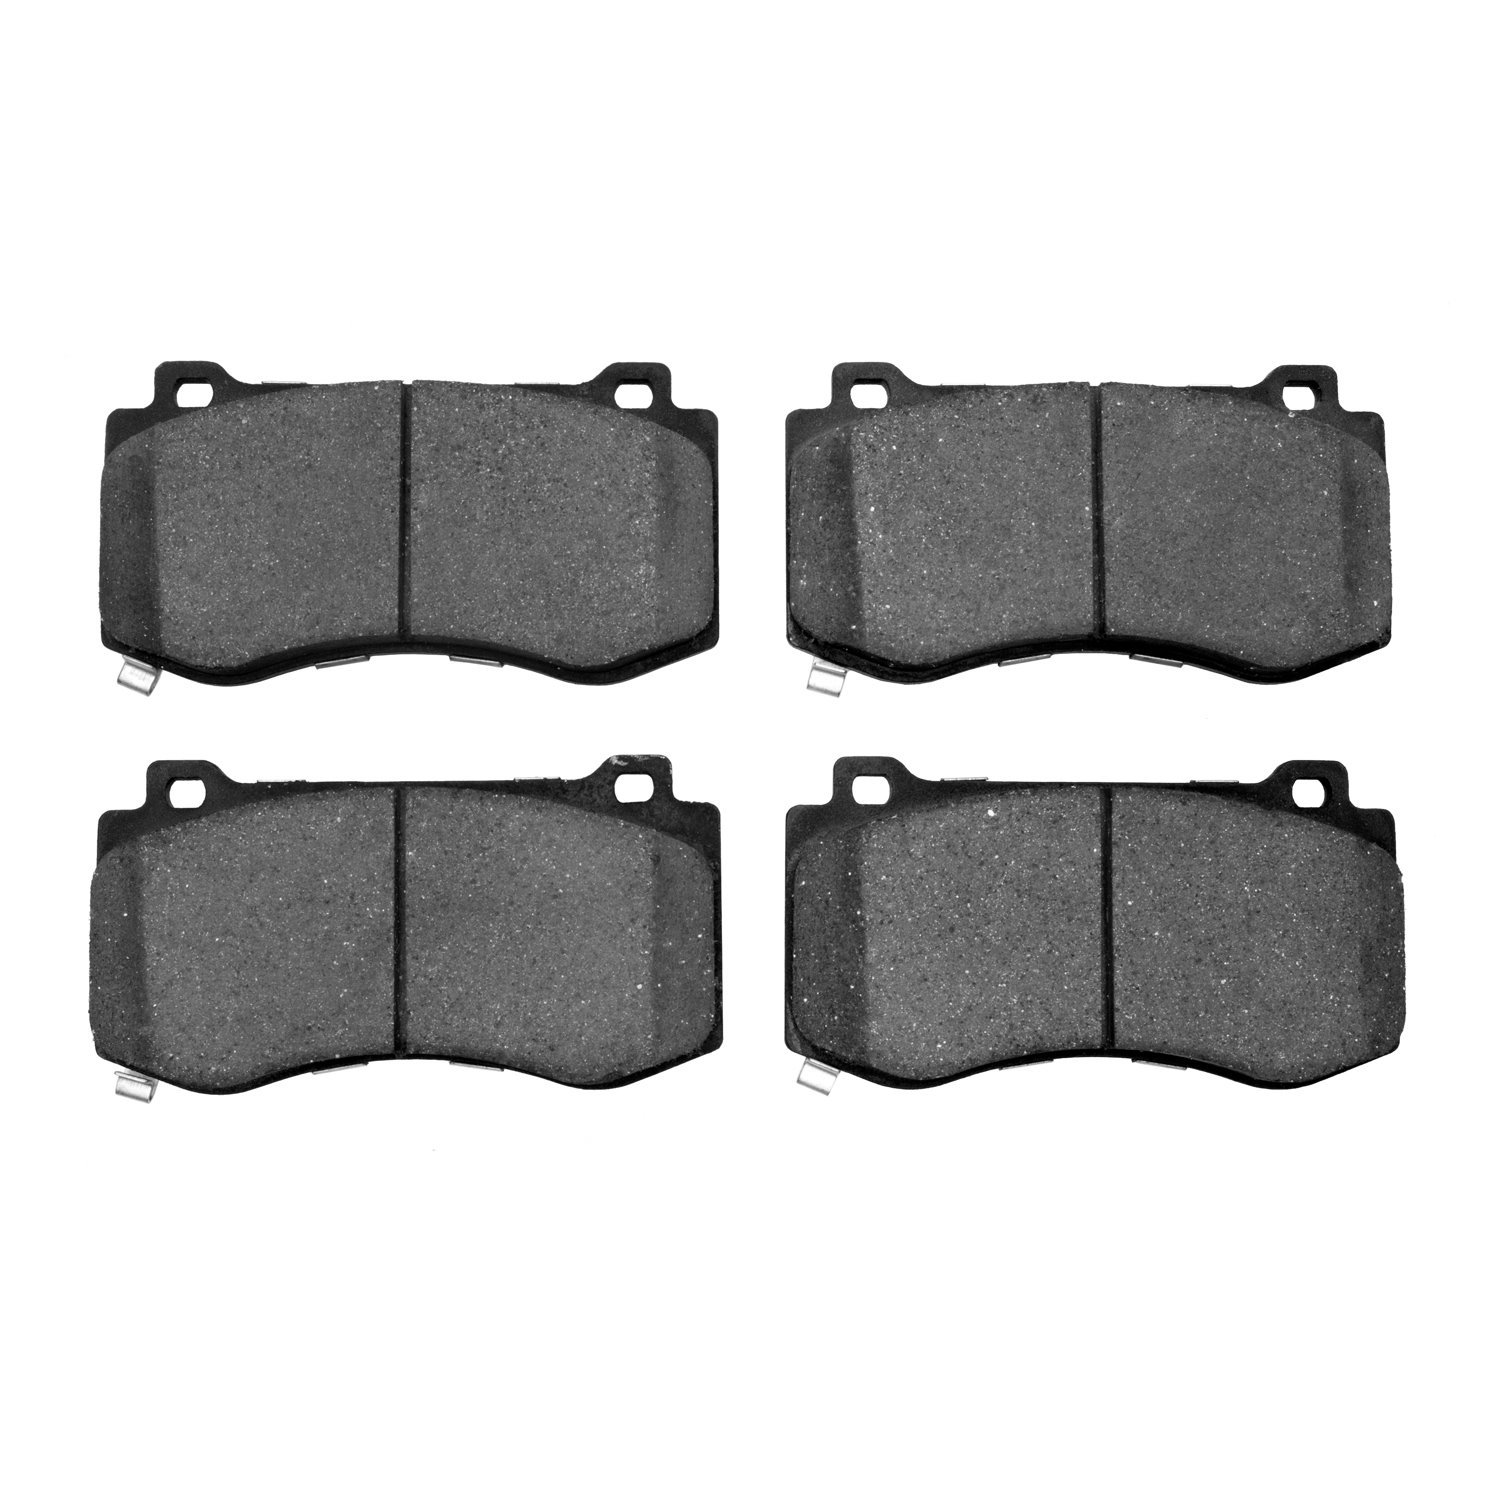 1400-1149-00 Ultimate-Duty Brake Pads Kit, Fits Select Mopar, Position: Front